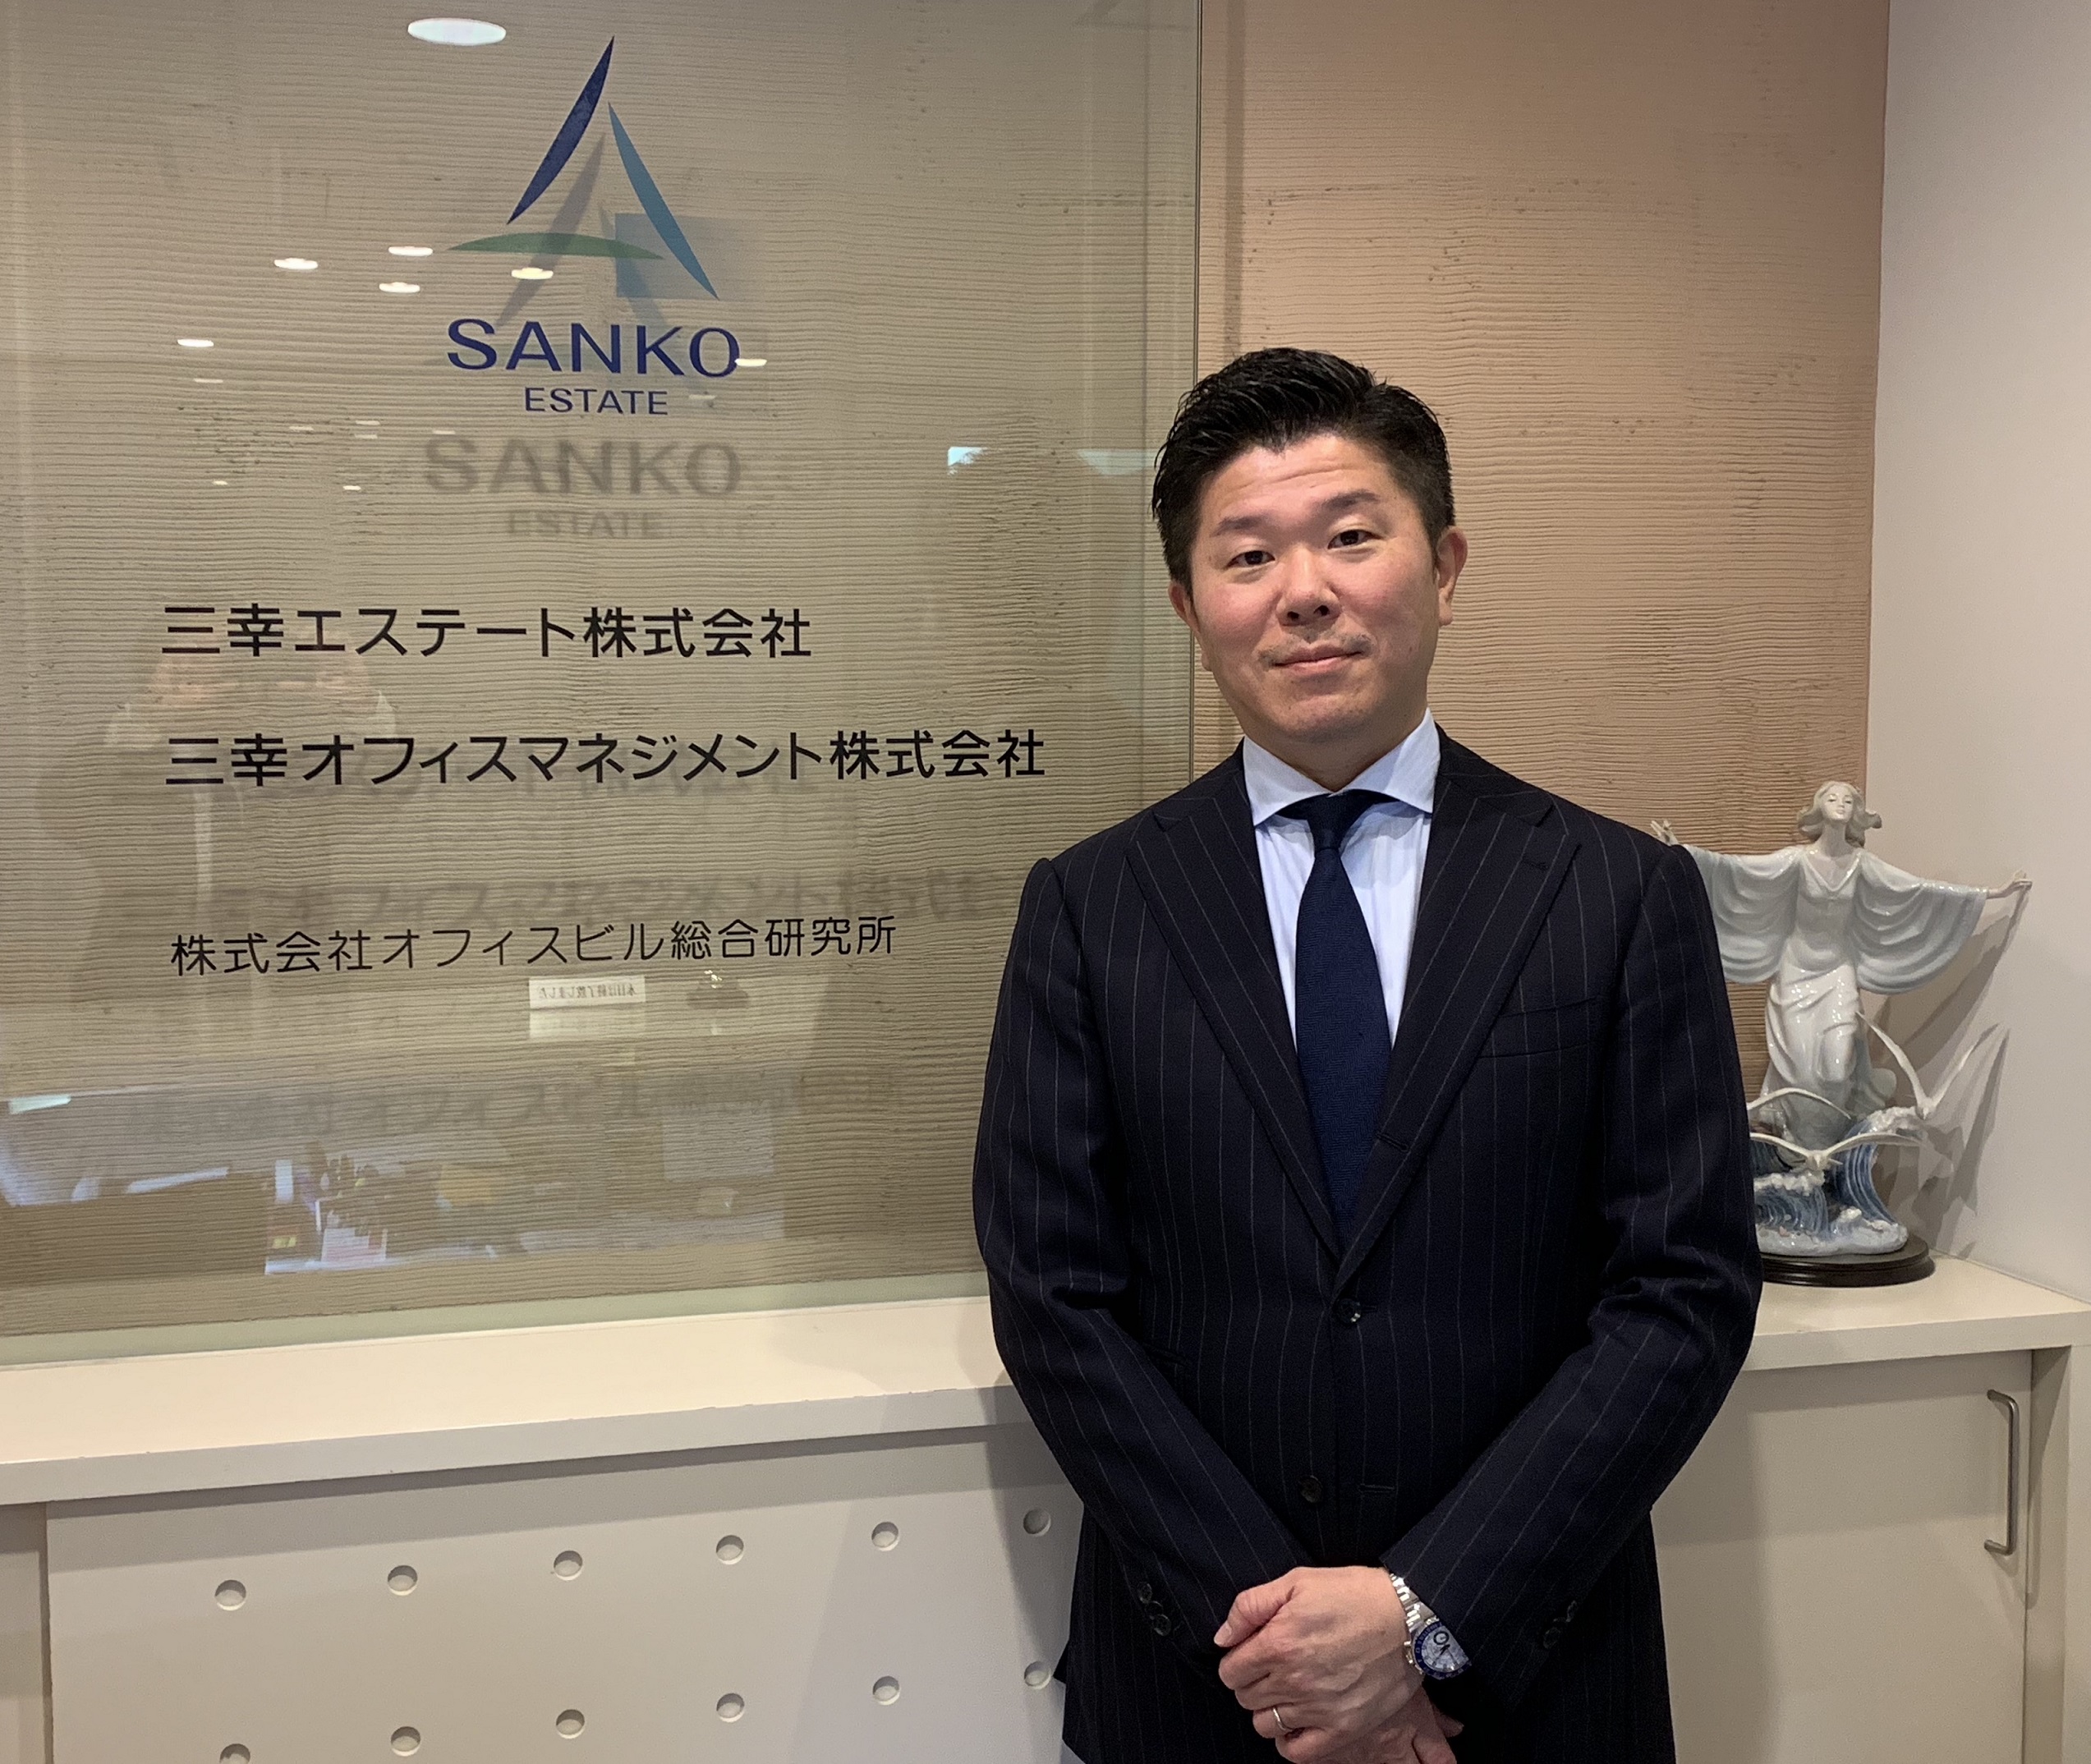 Member Introduction Sanko Estate: A Lodestar in Japan’s Office Leasing Market